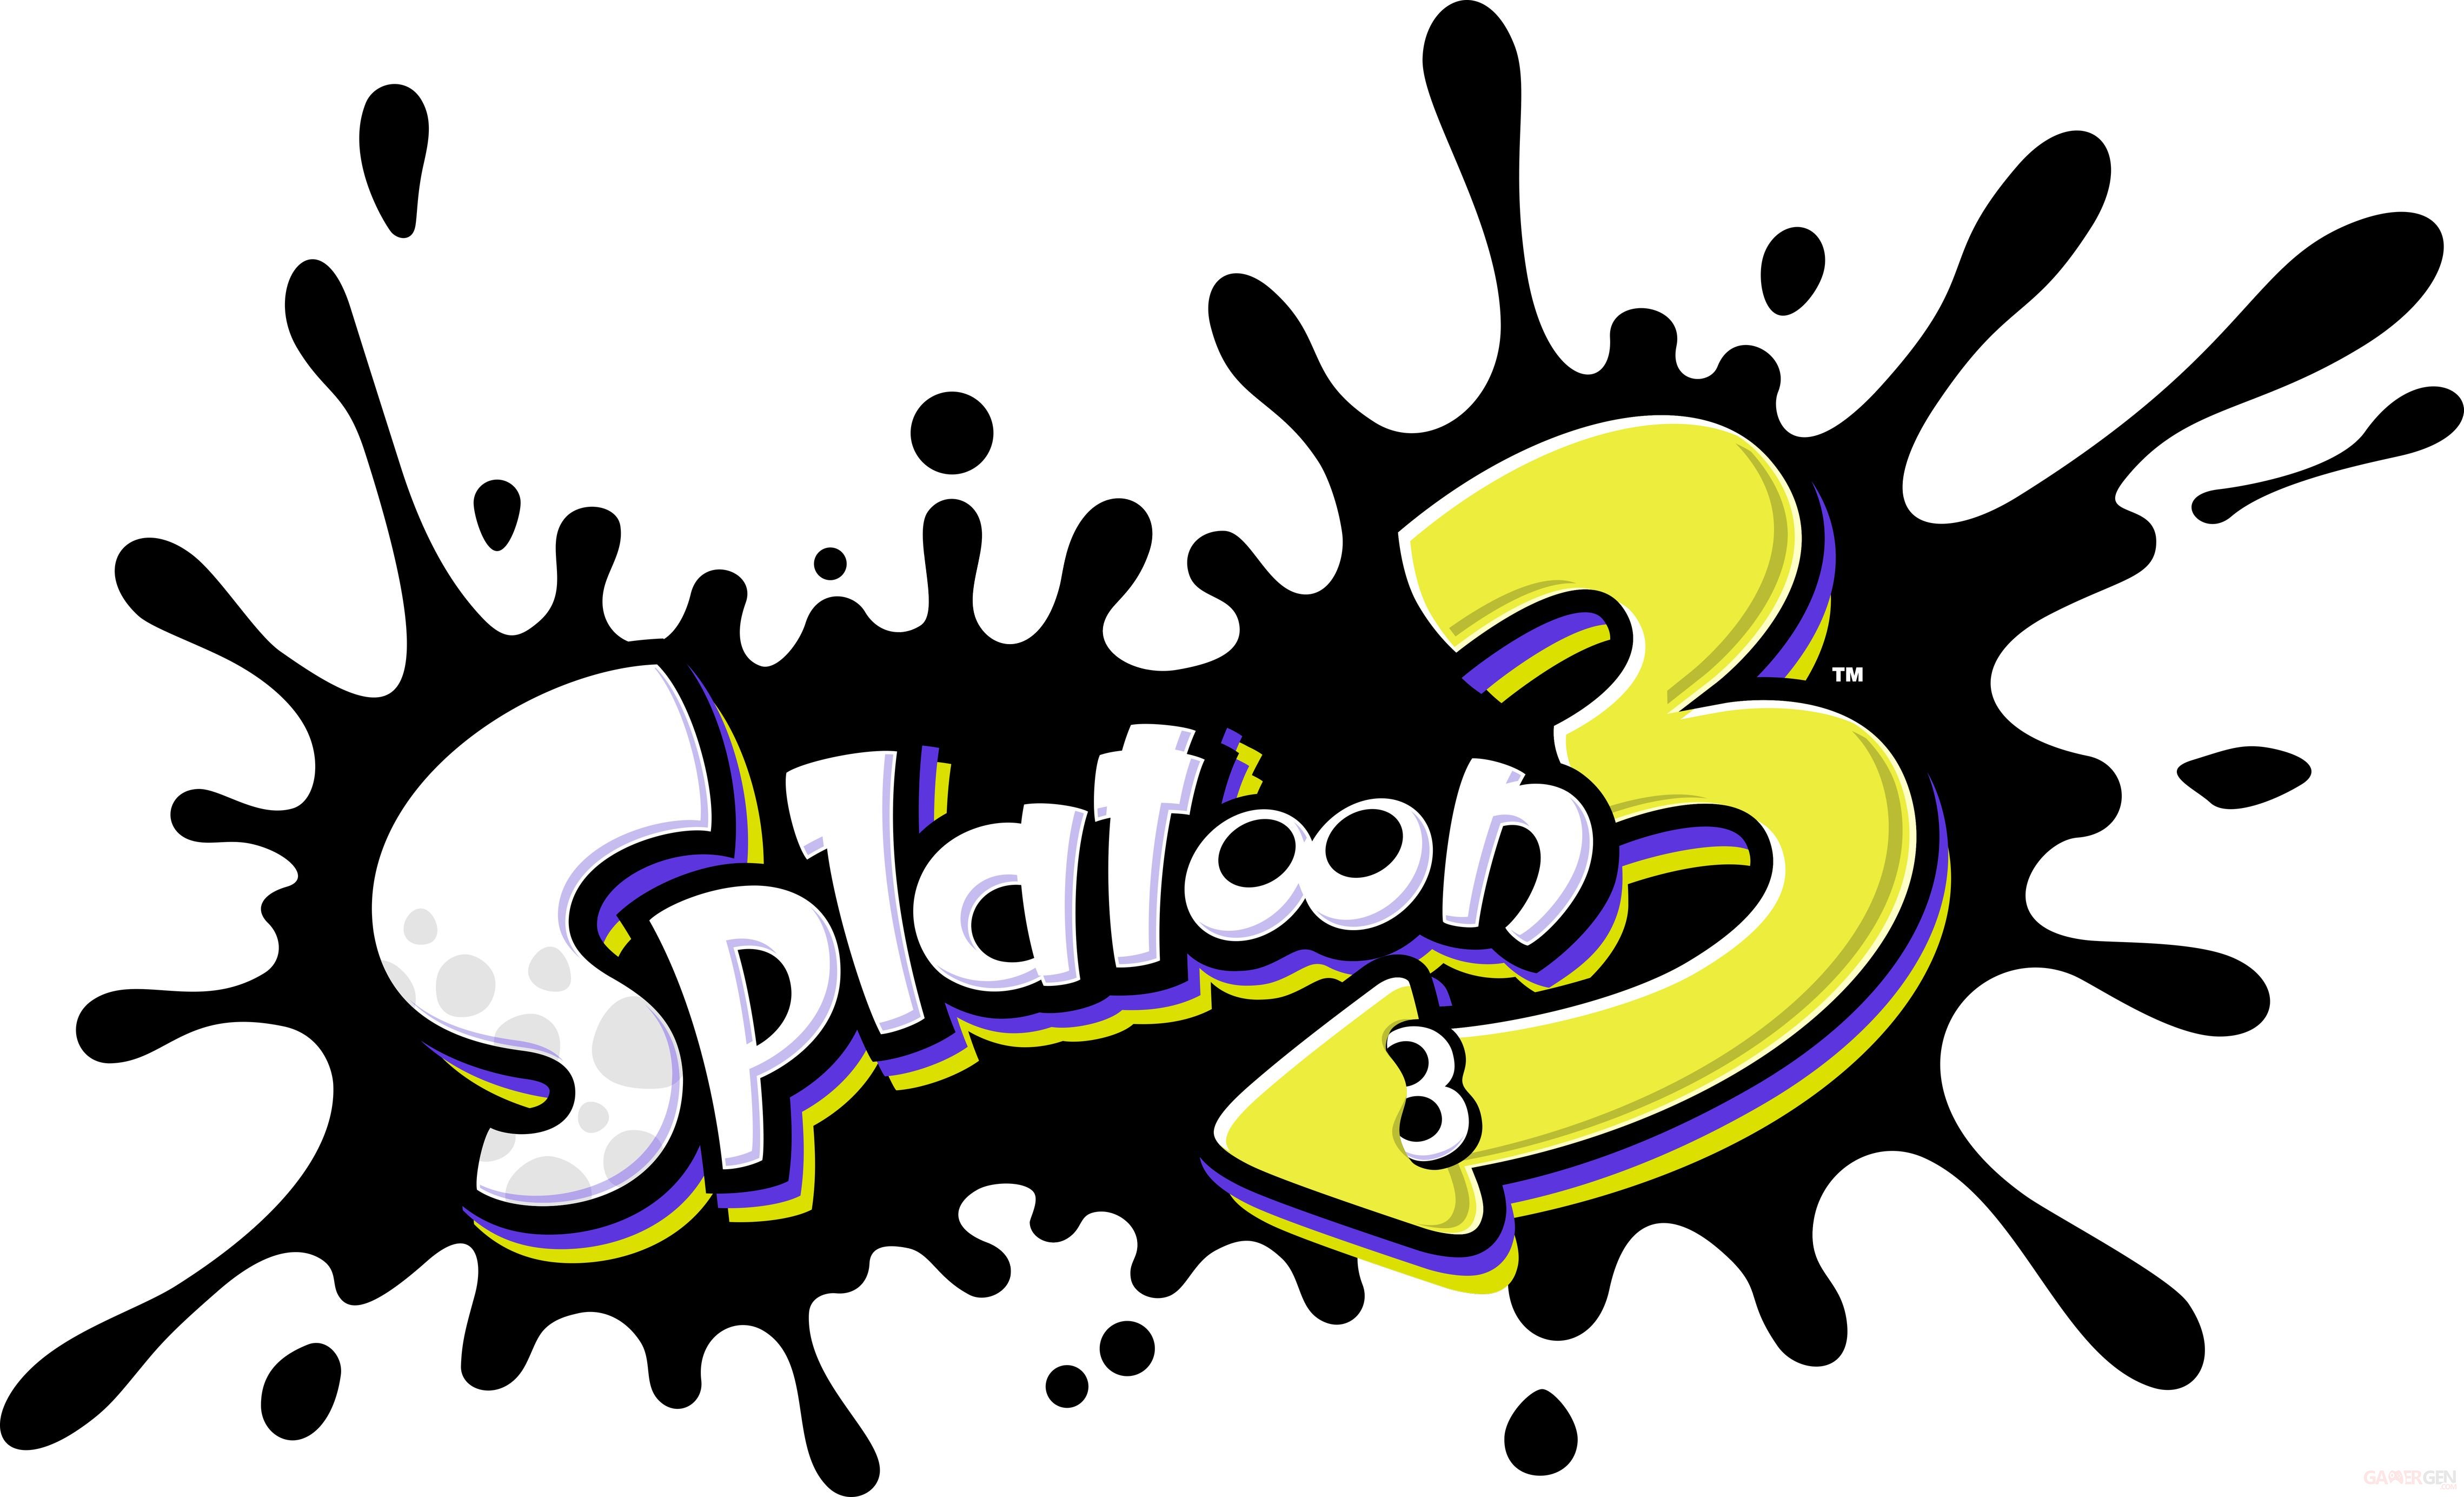 Video Game Splatoon 3 HD Wallpaper | Background Image